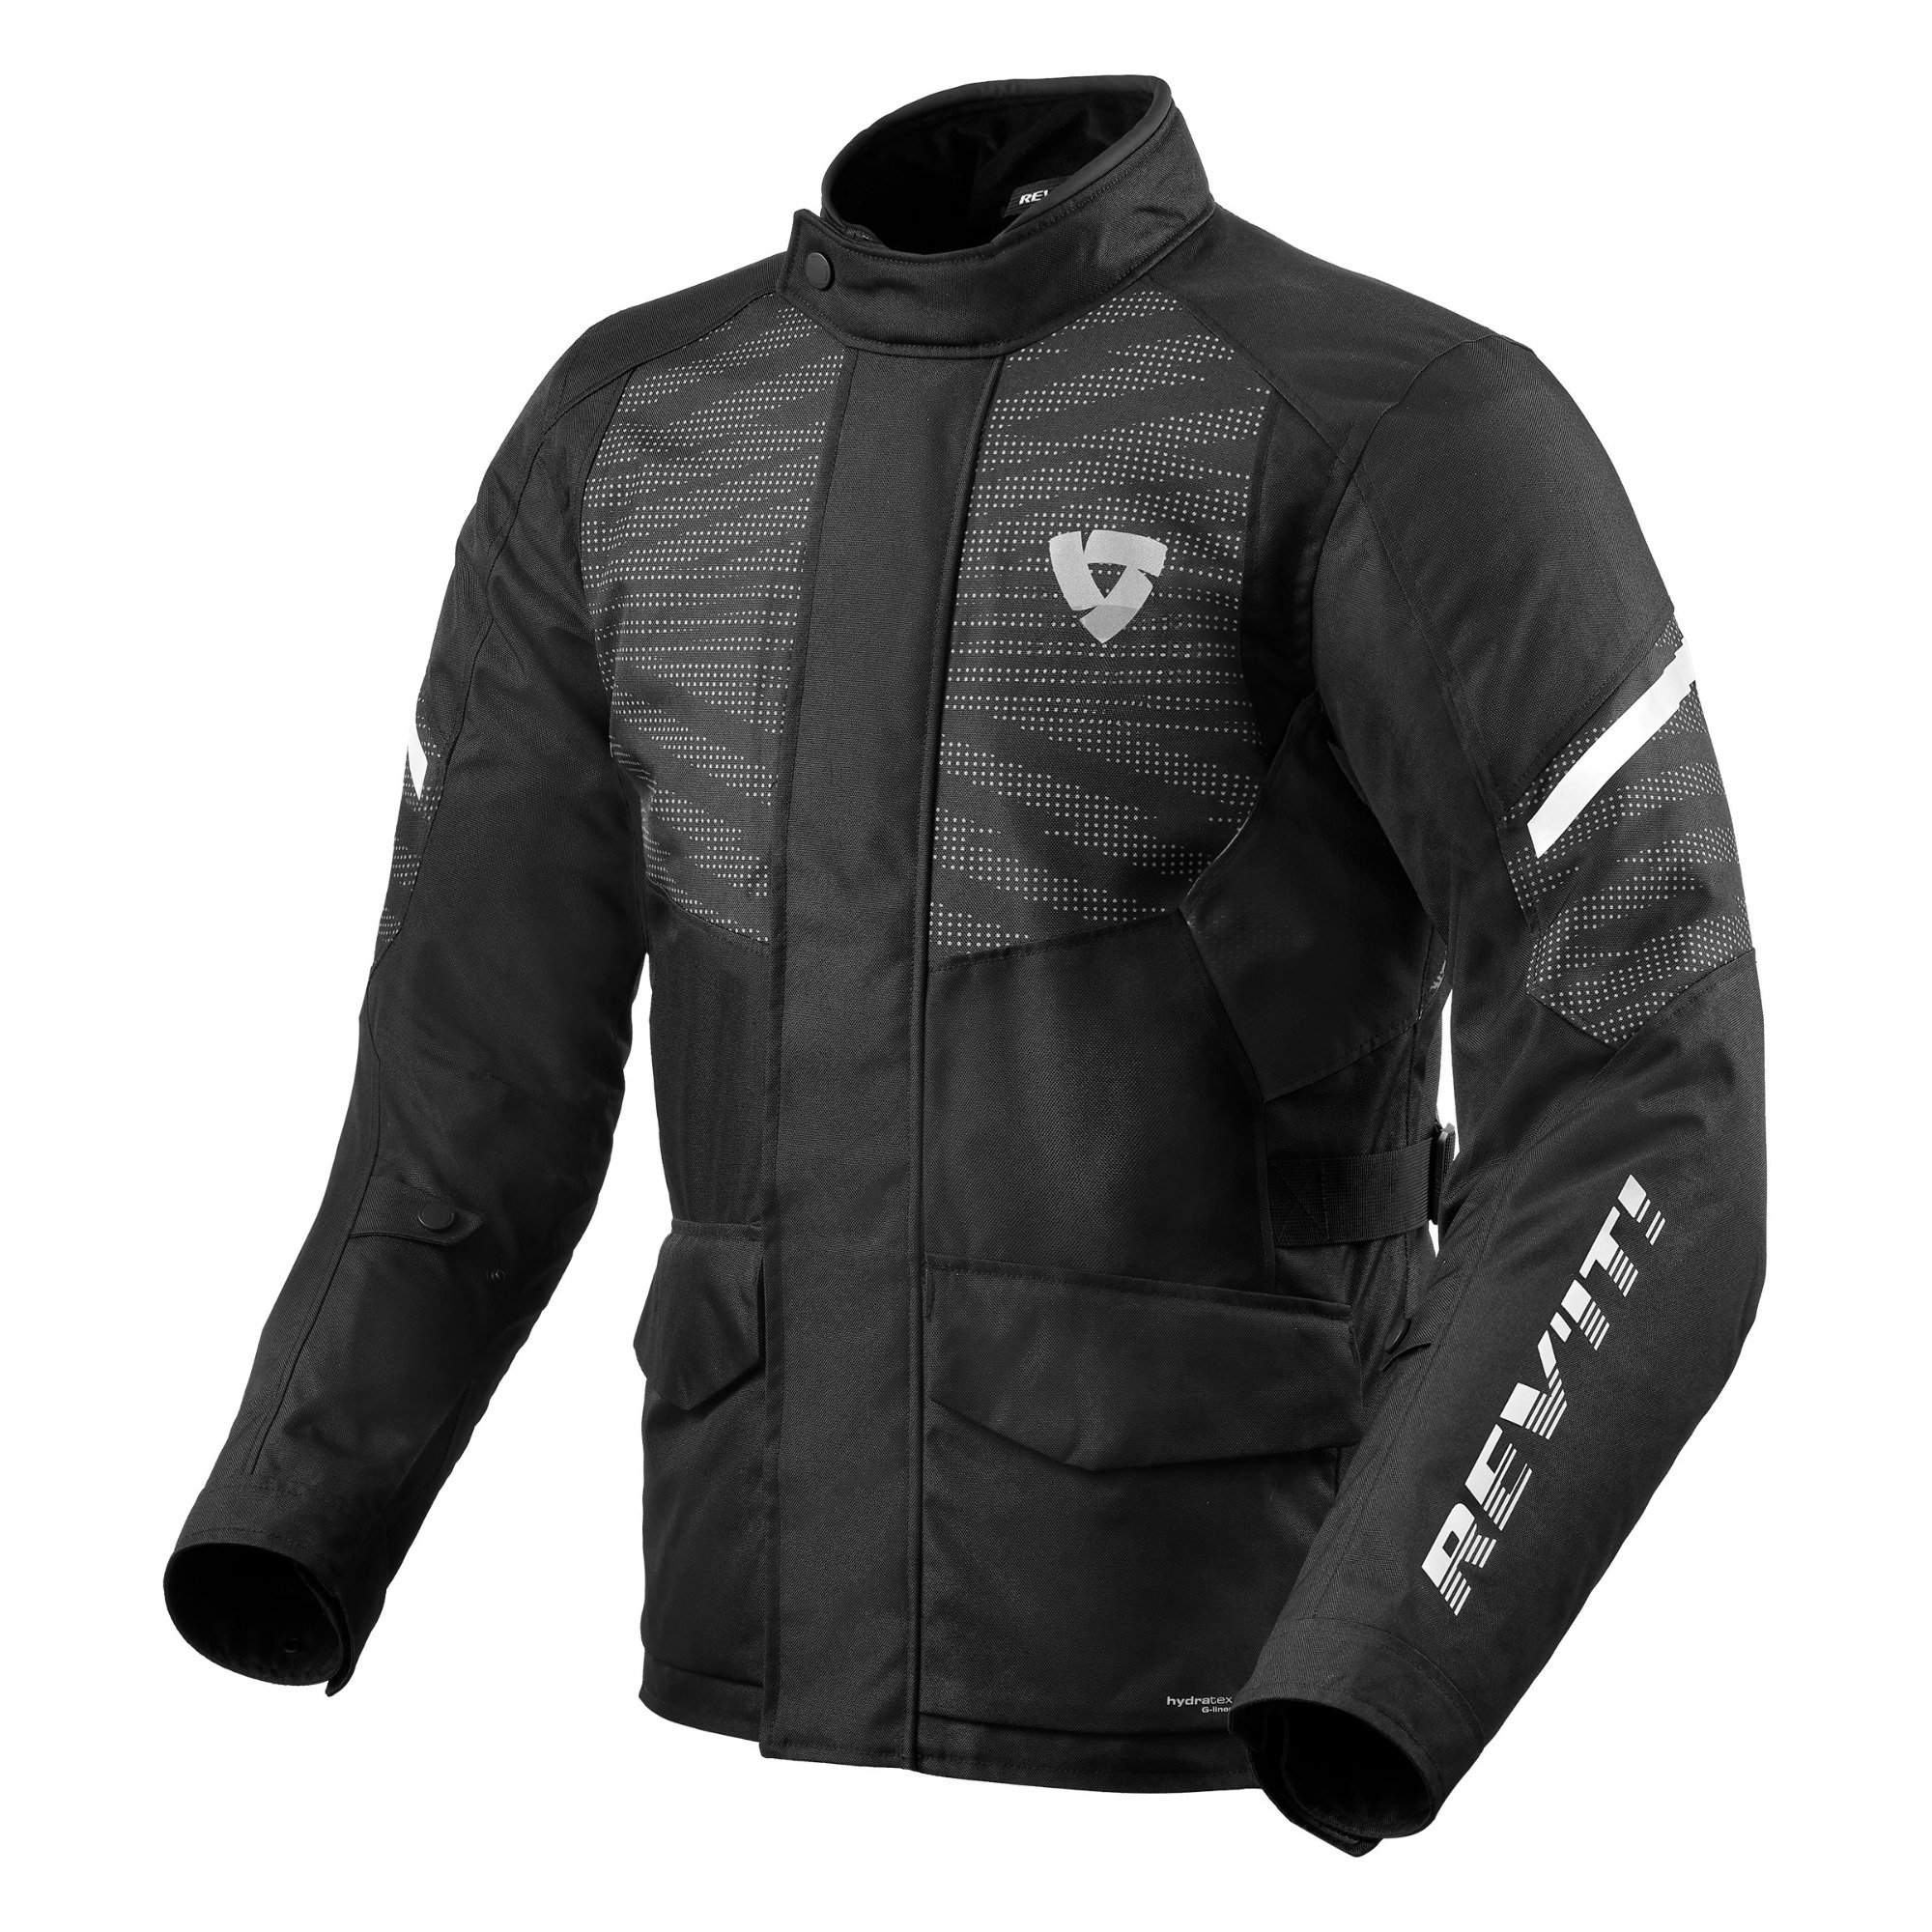 Image of REV'IT! Duke H2O Jacket Black Size L ID 8700001331951